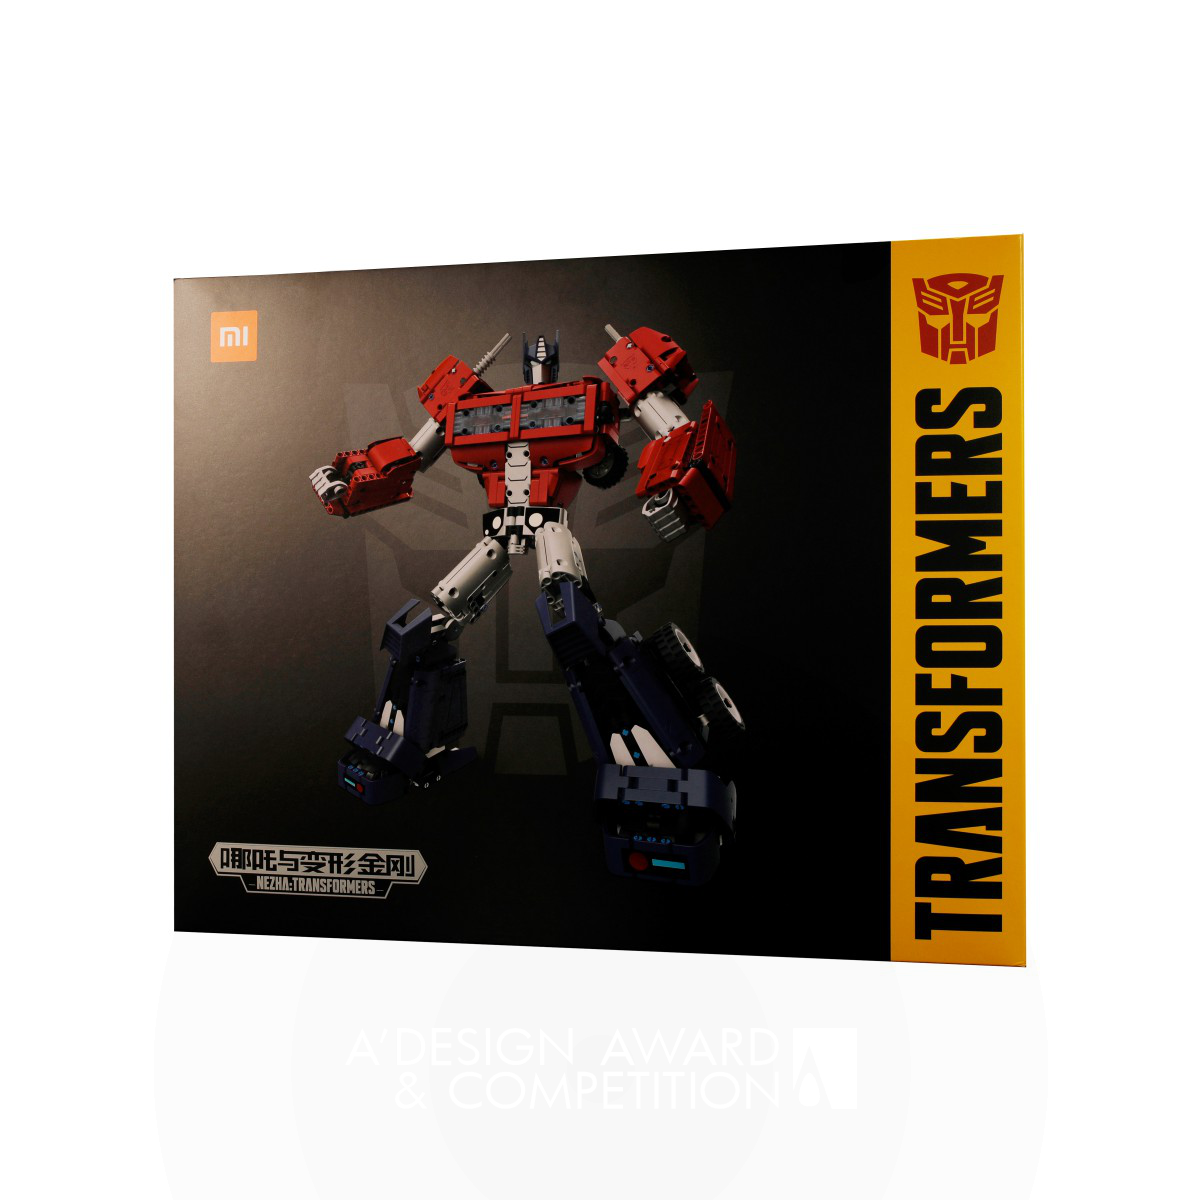 Mi Transformers Optimus Prime Packaging Building Block Toy 